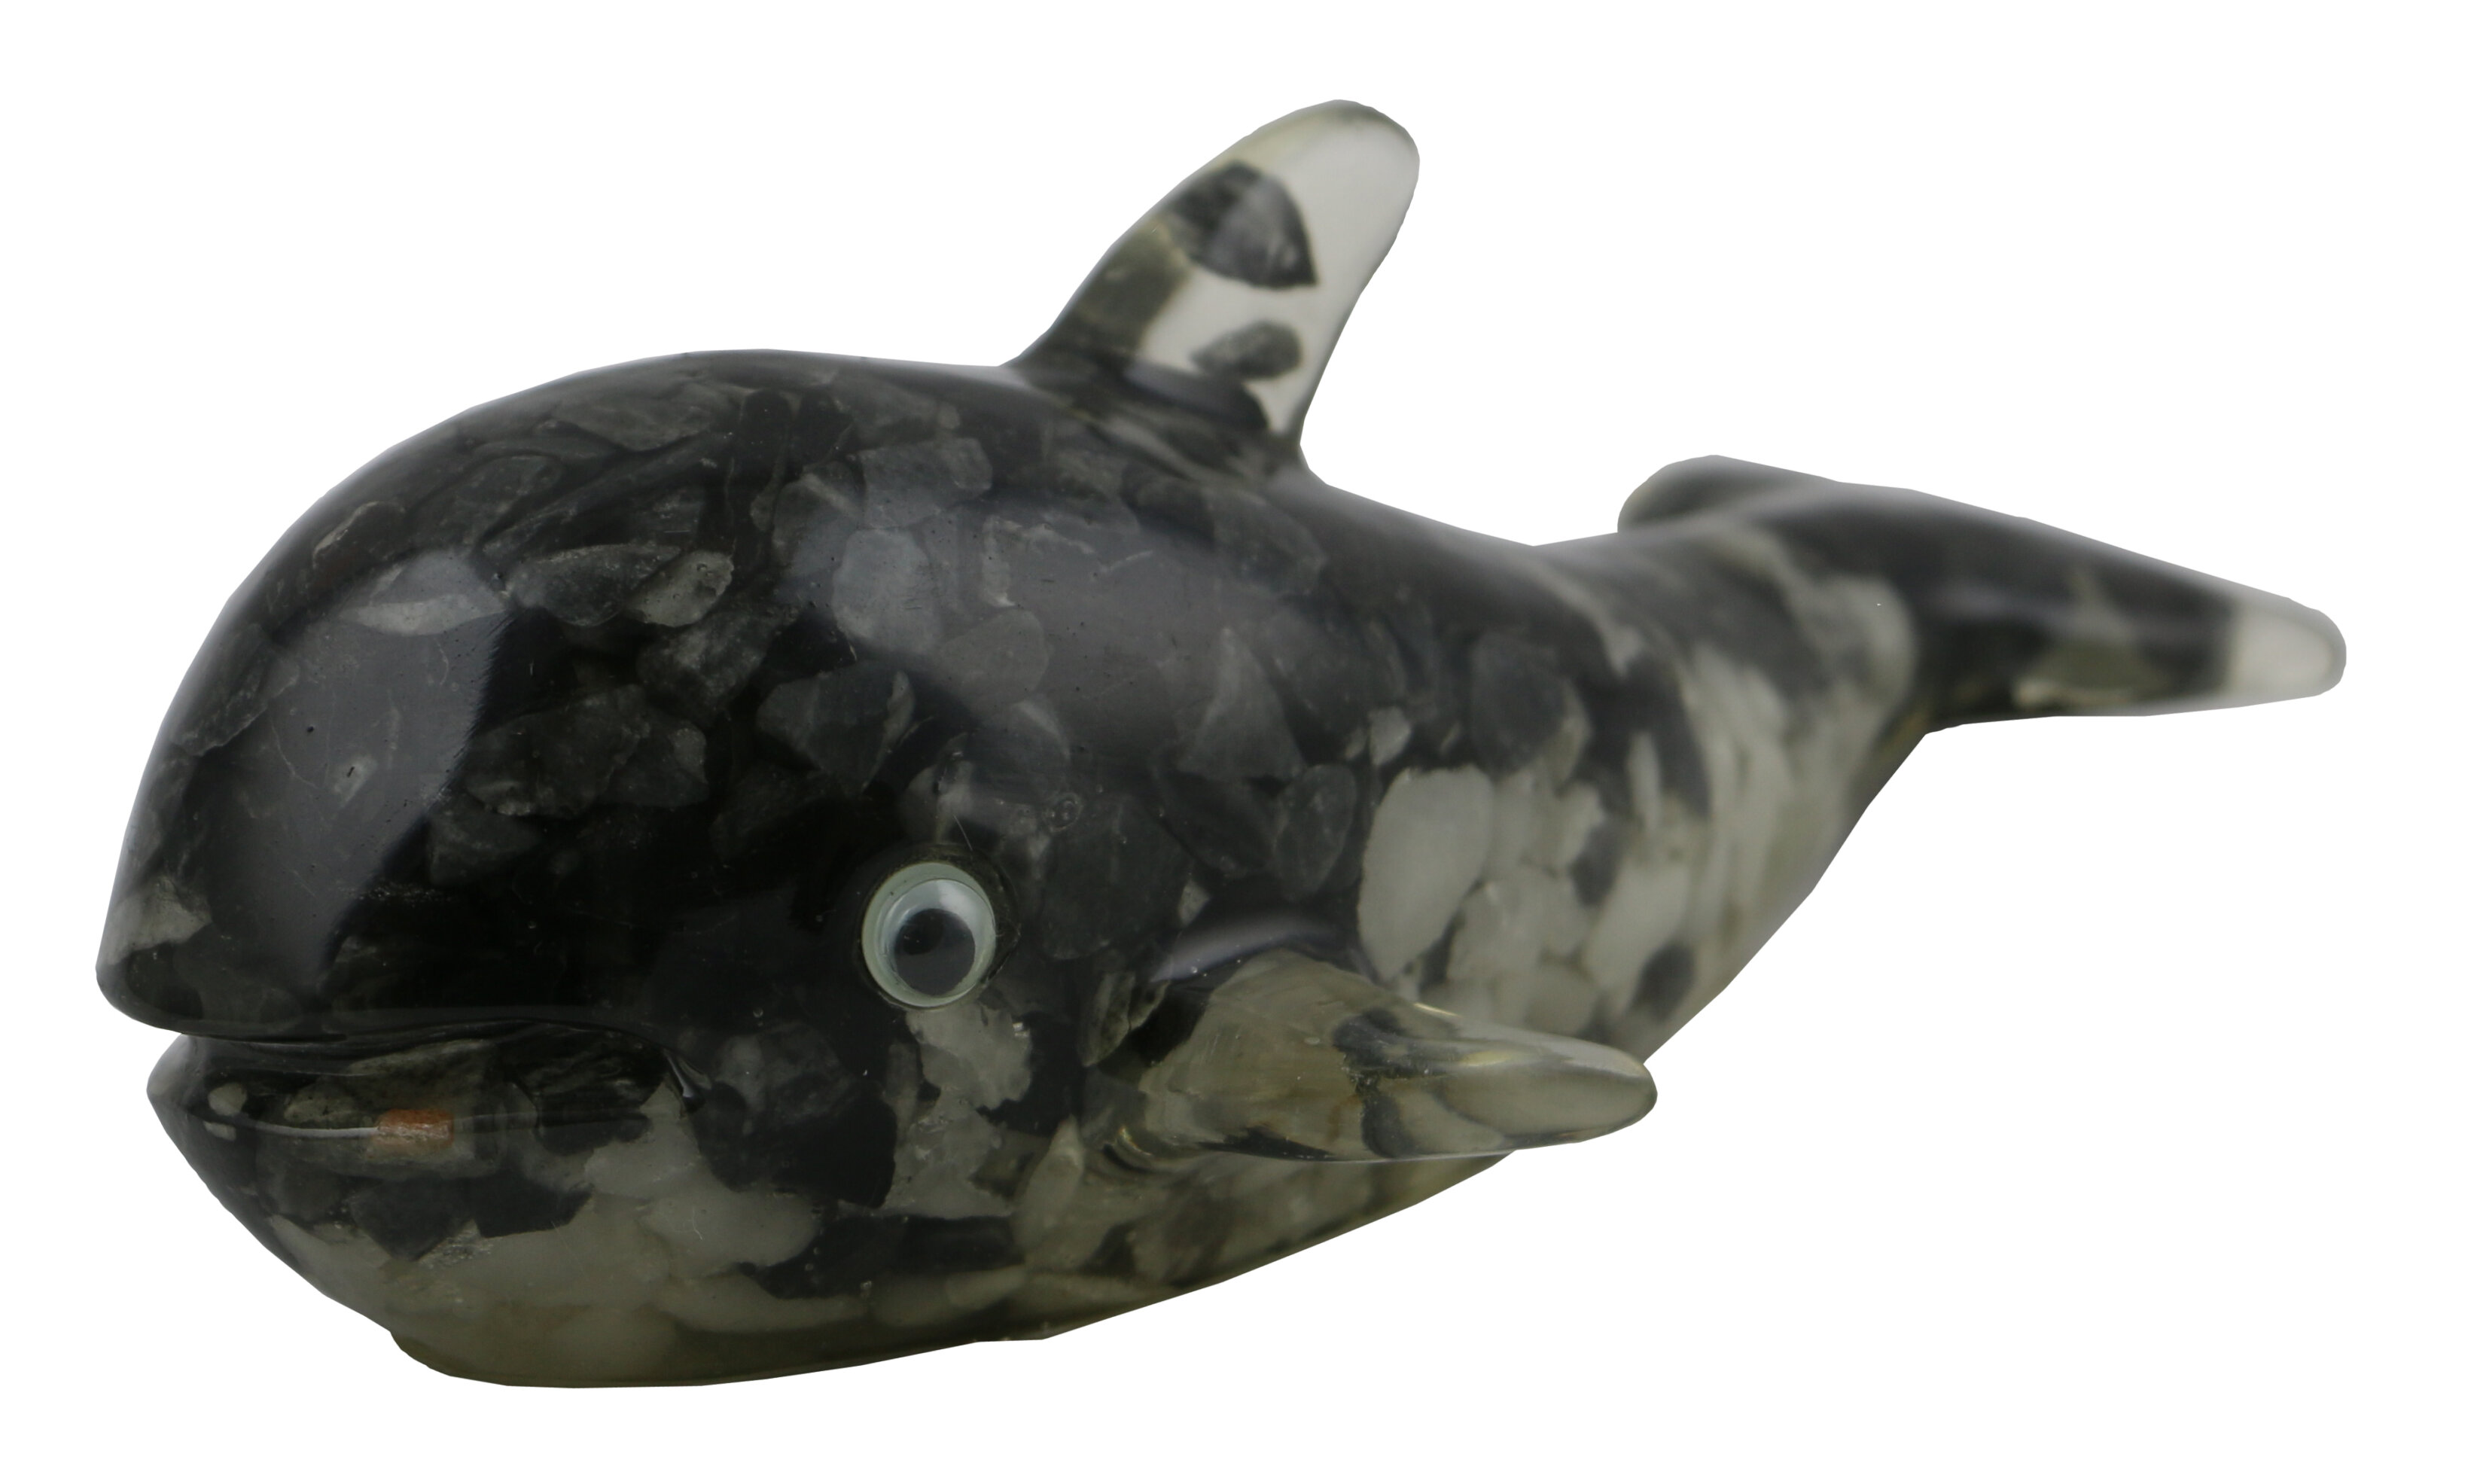 killer whale figurine